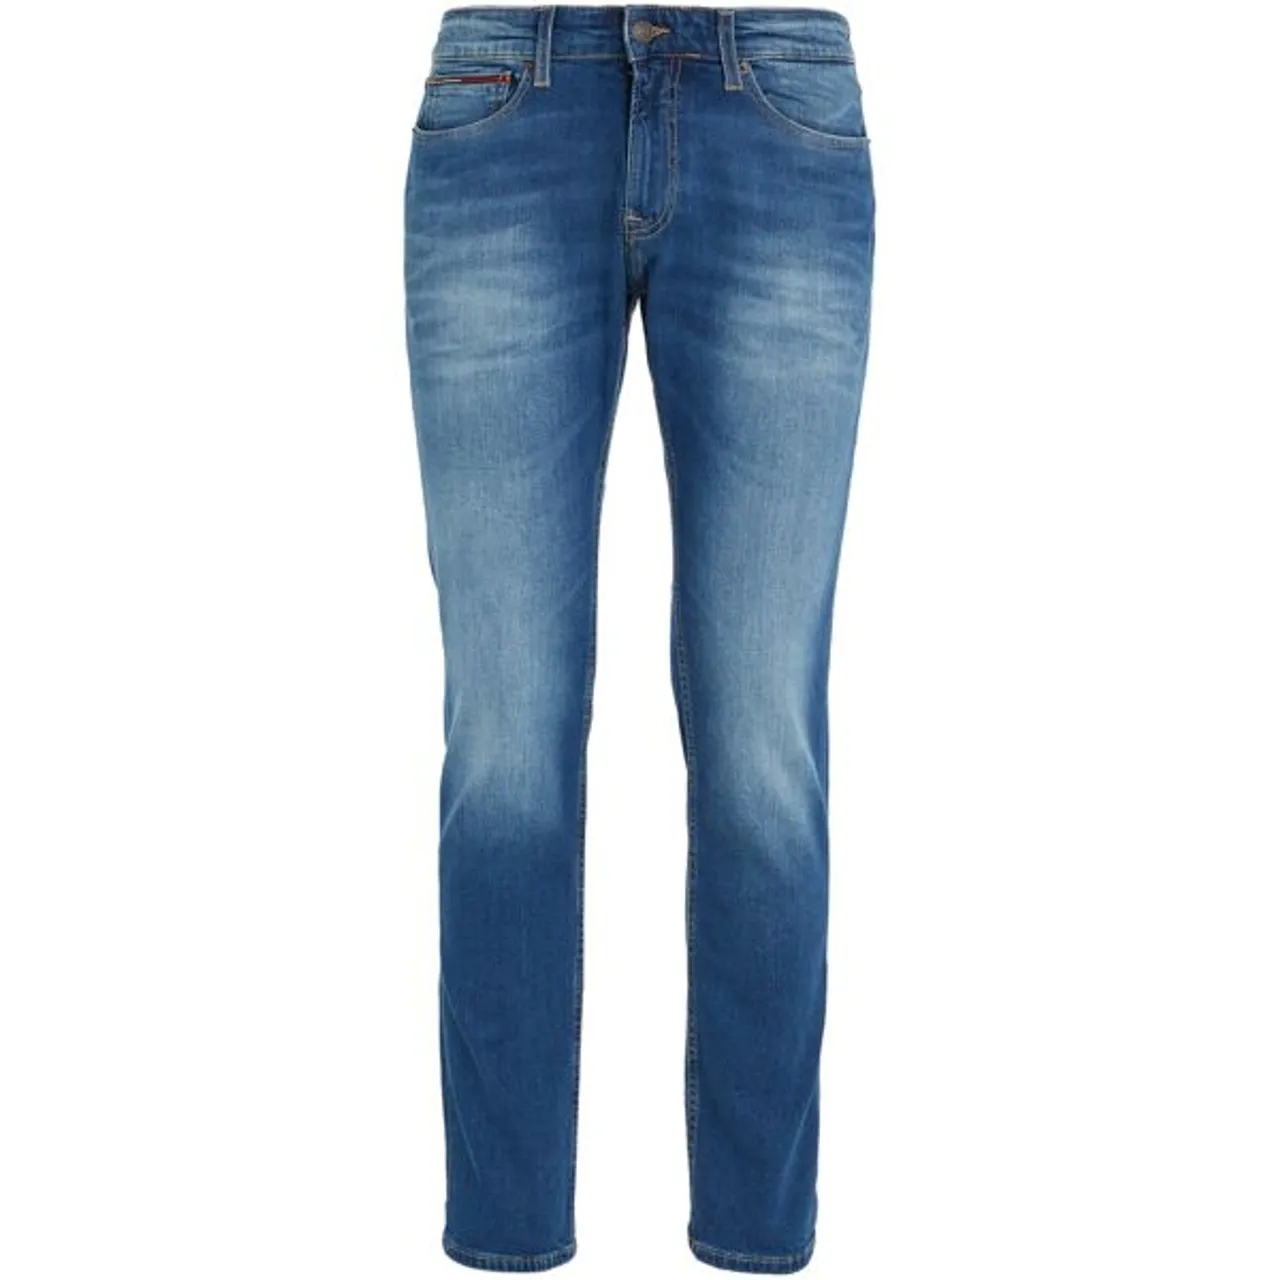 Slim-fit-Jeans TOMMY JEANS "SLIM SCANTON" Gr. 31, Länge 36, blau (wilson mid blue stretch) Herren Jeans Slim Fit